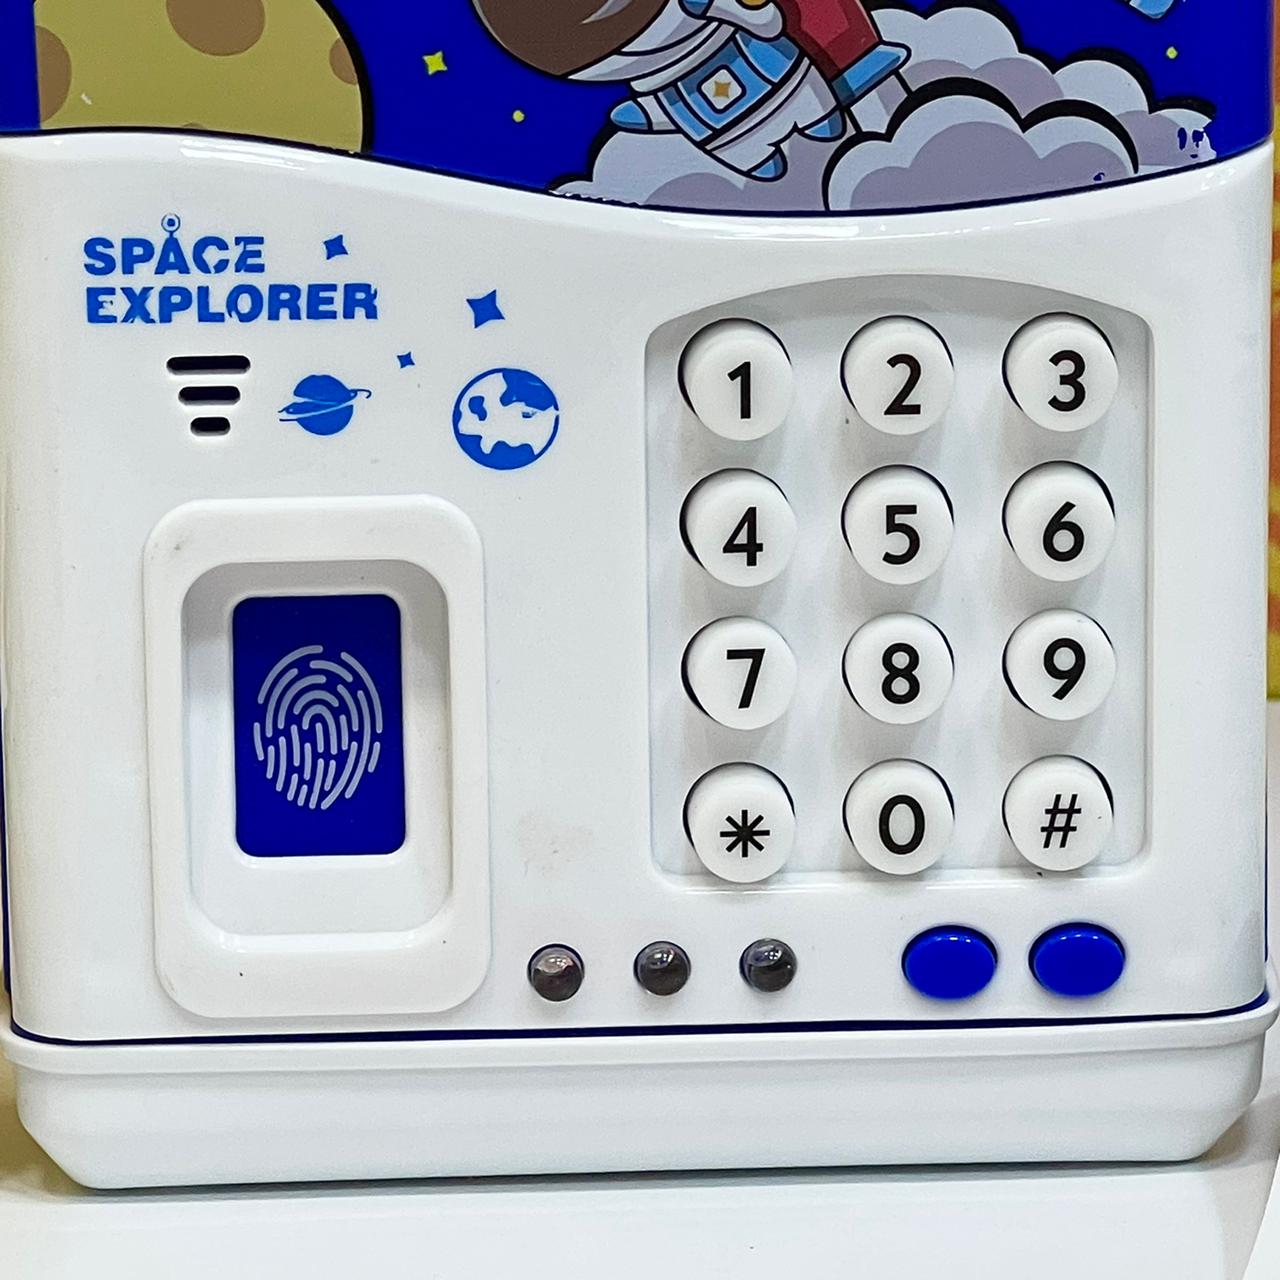 Space Explorer Piggy Bank with Finger Print Unlock